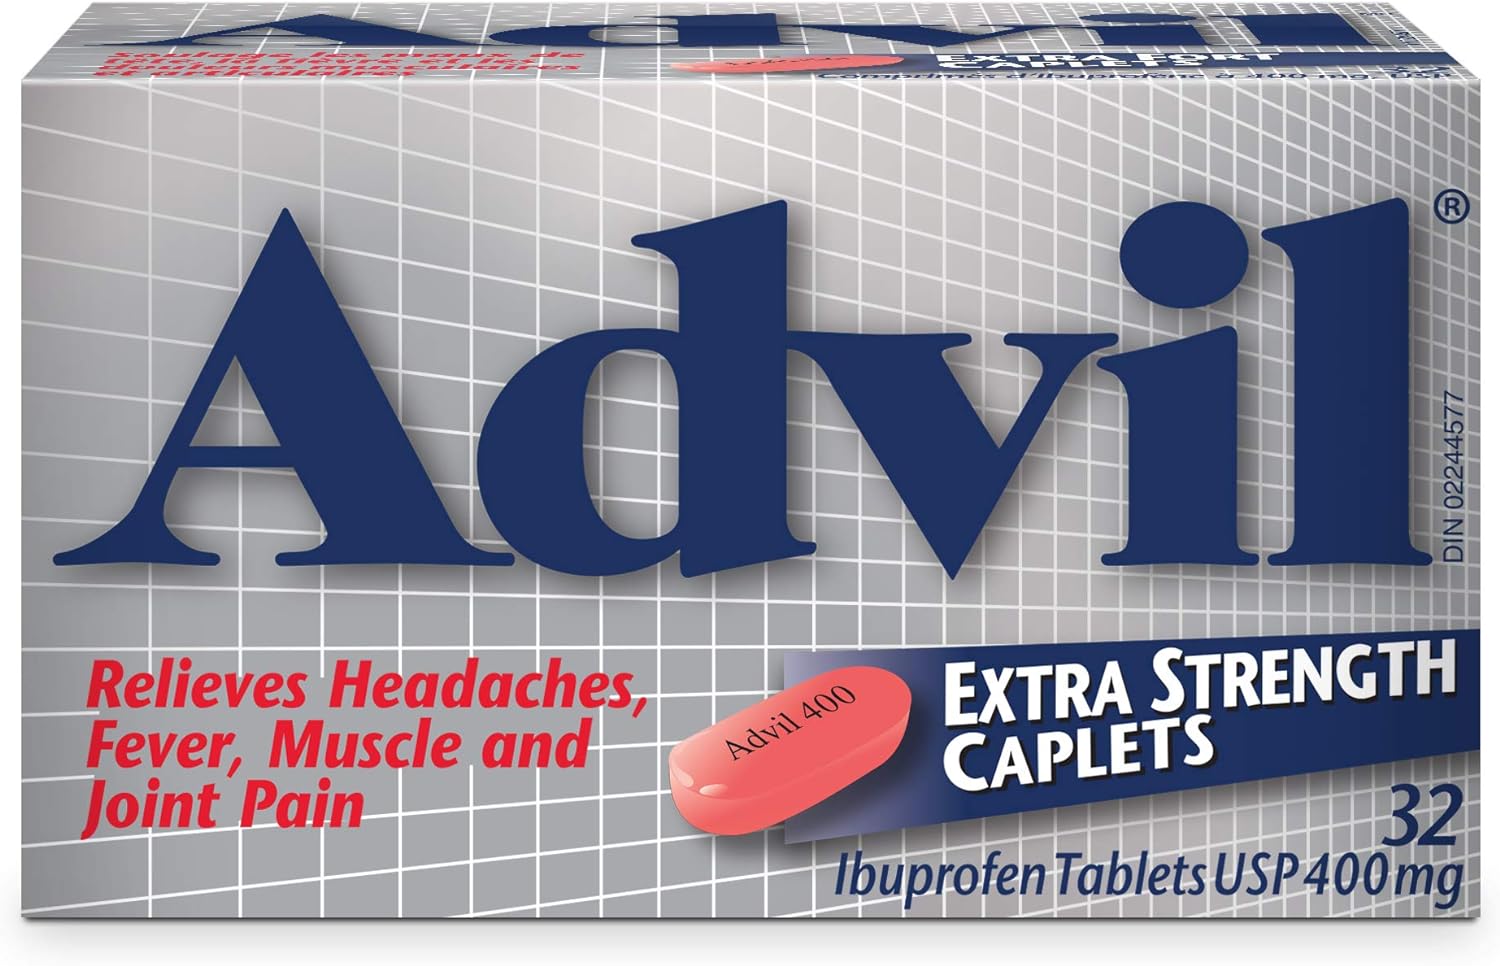 Advil Extra Strength 400mg (32 caplets)